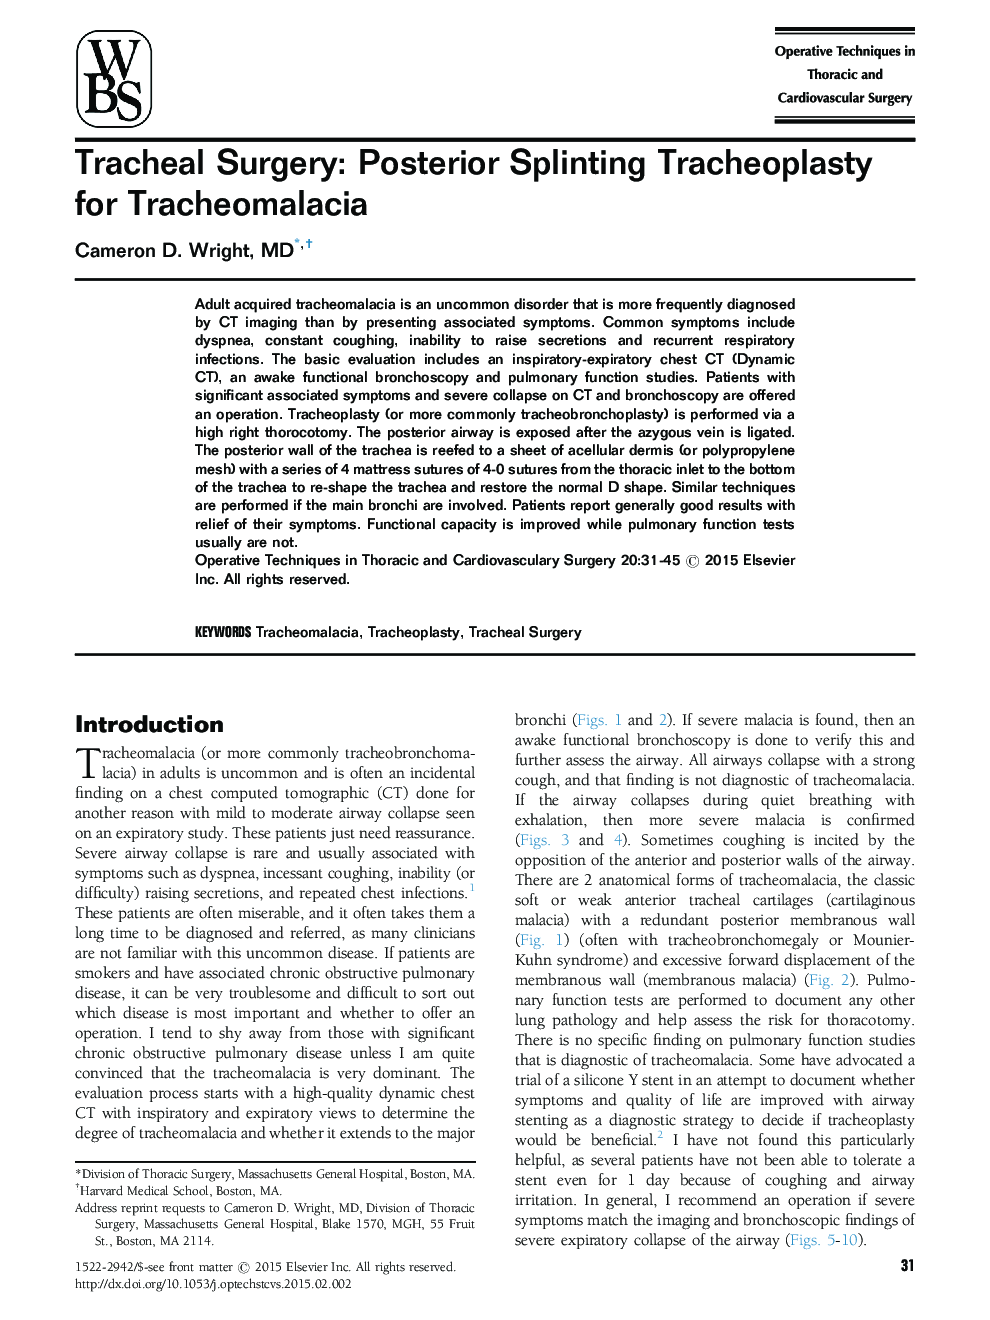 Tracheal Surgery: Posterior Splinting Tracheoplasty for Tracheomalacia